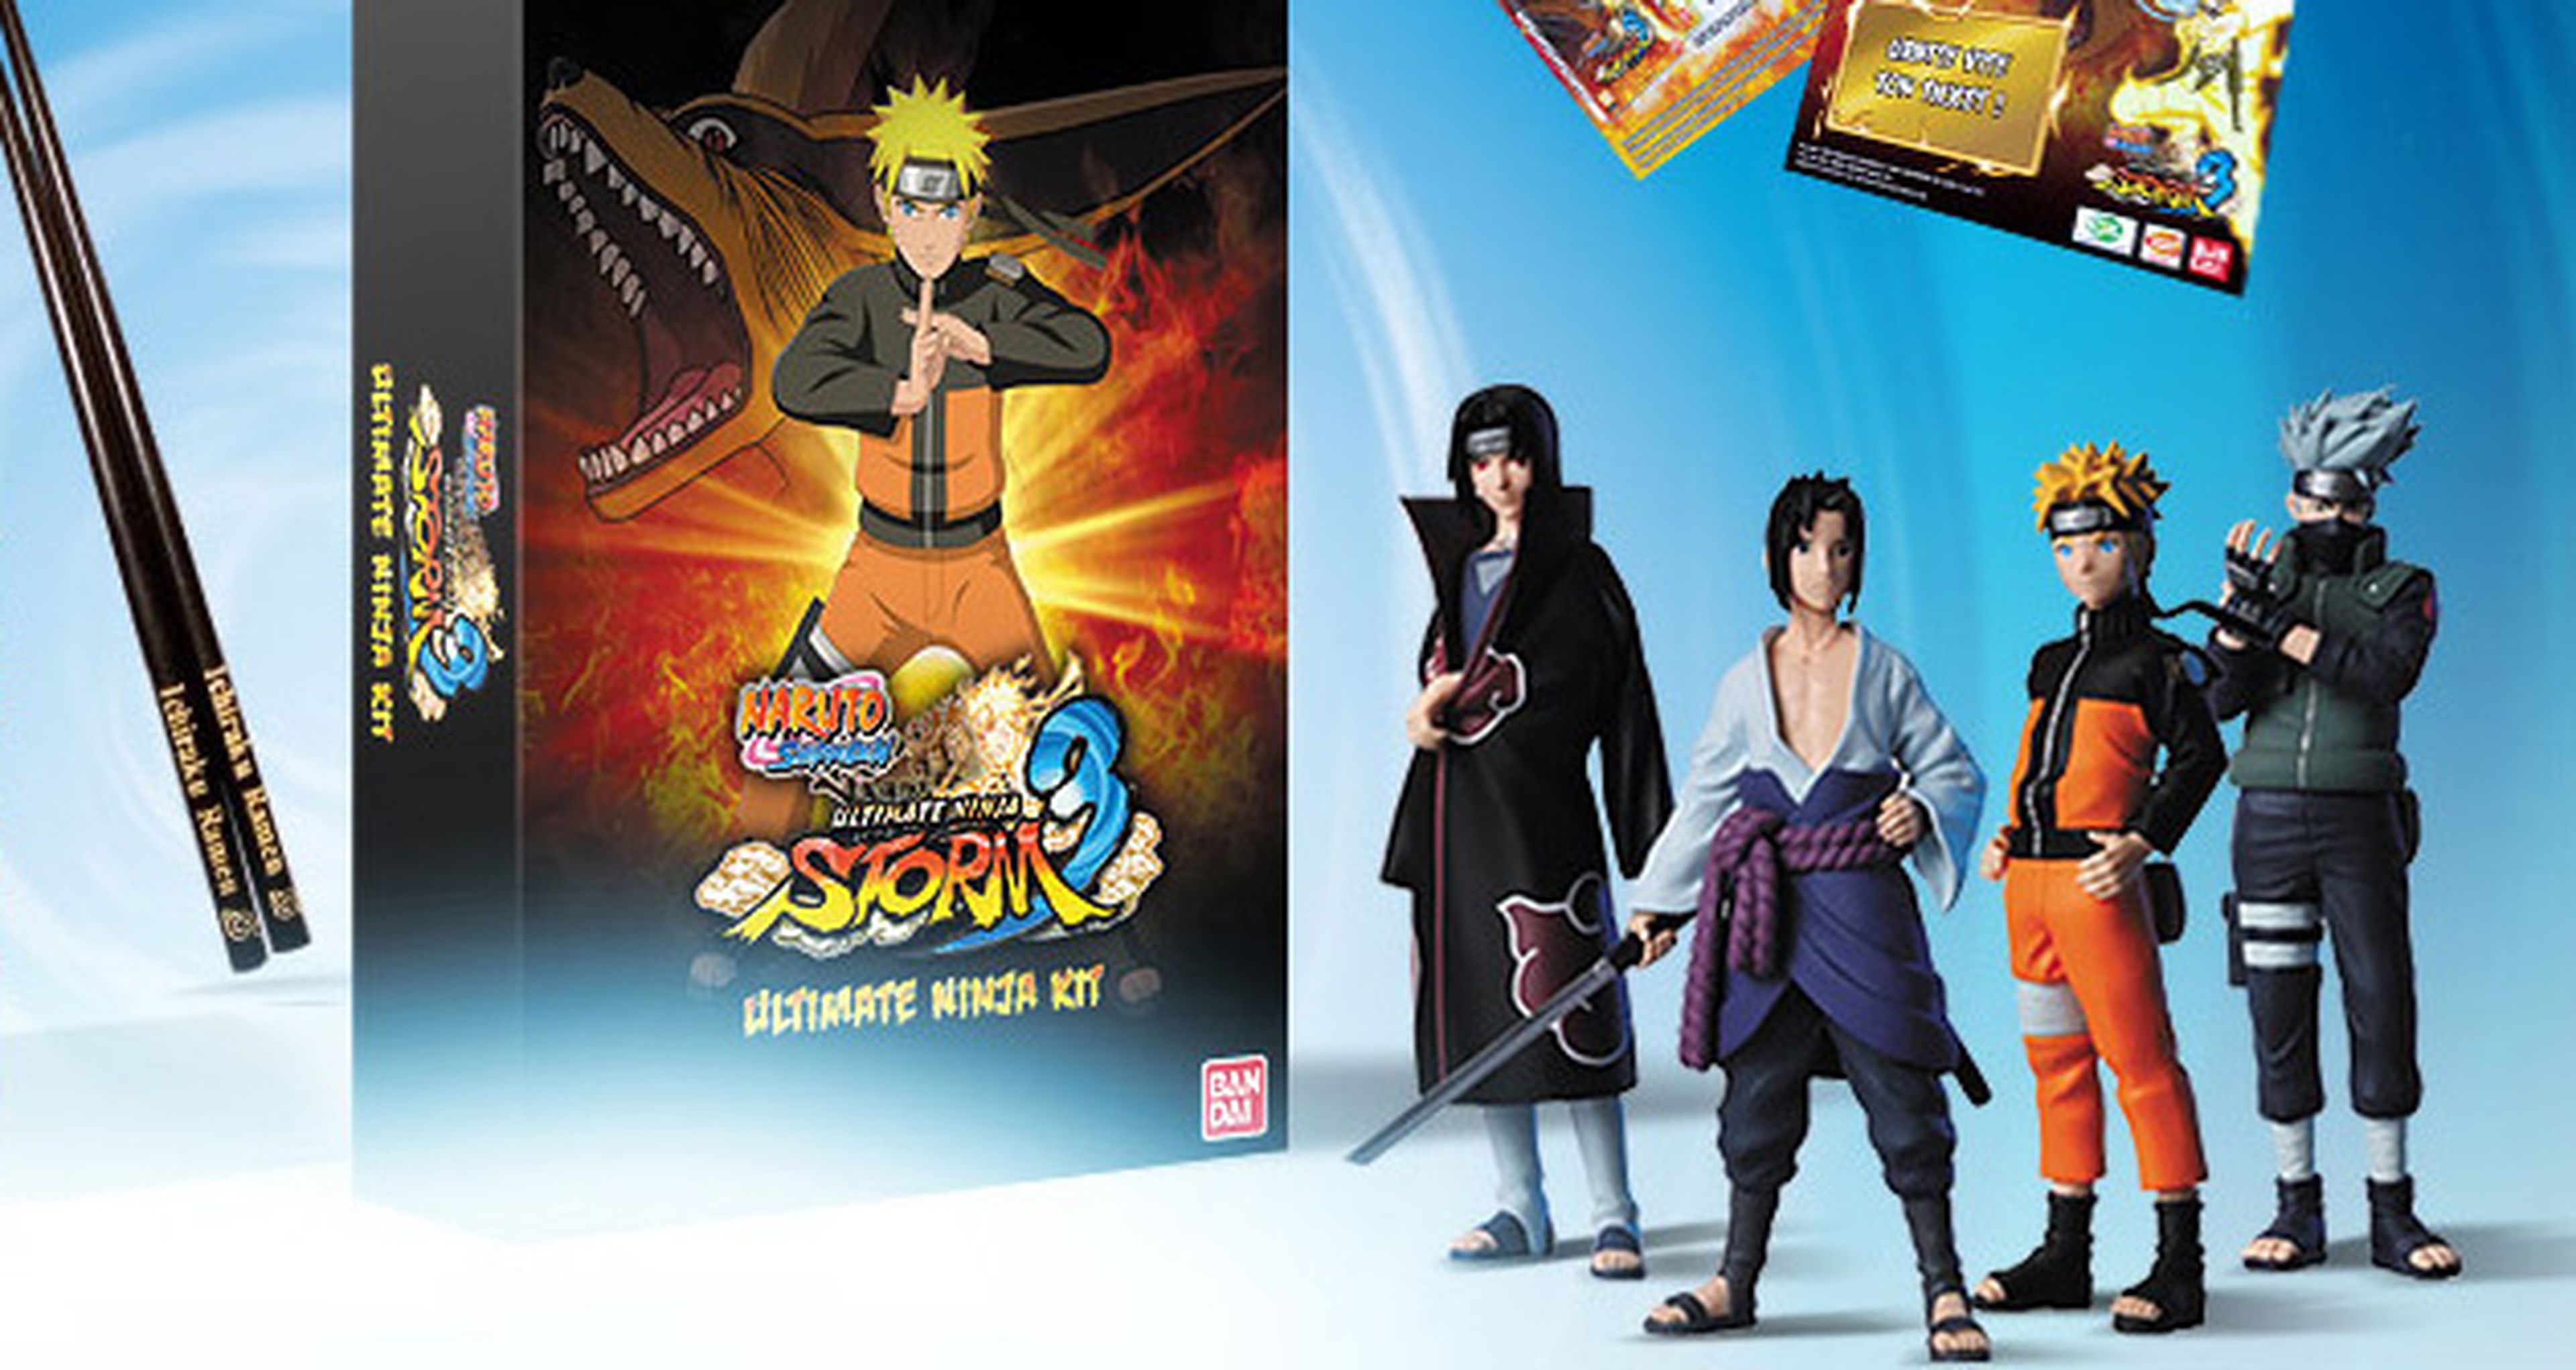 Naruto SUNS 3 y su Ultimate Ninja Kit